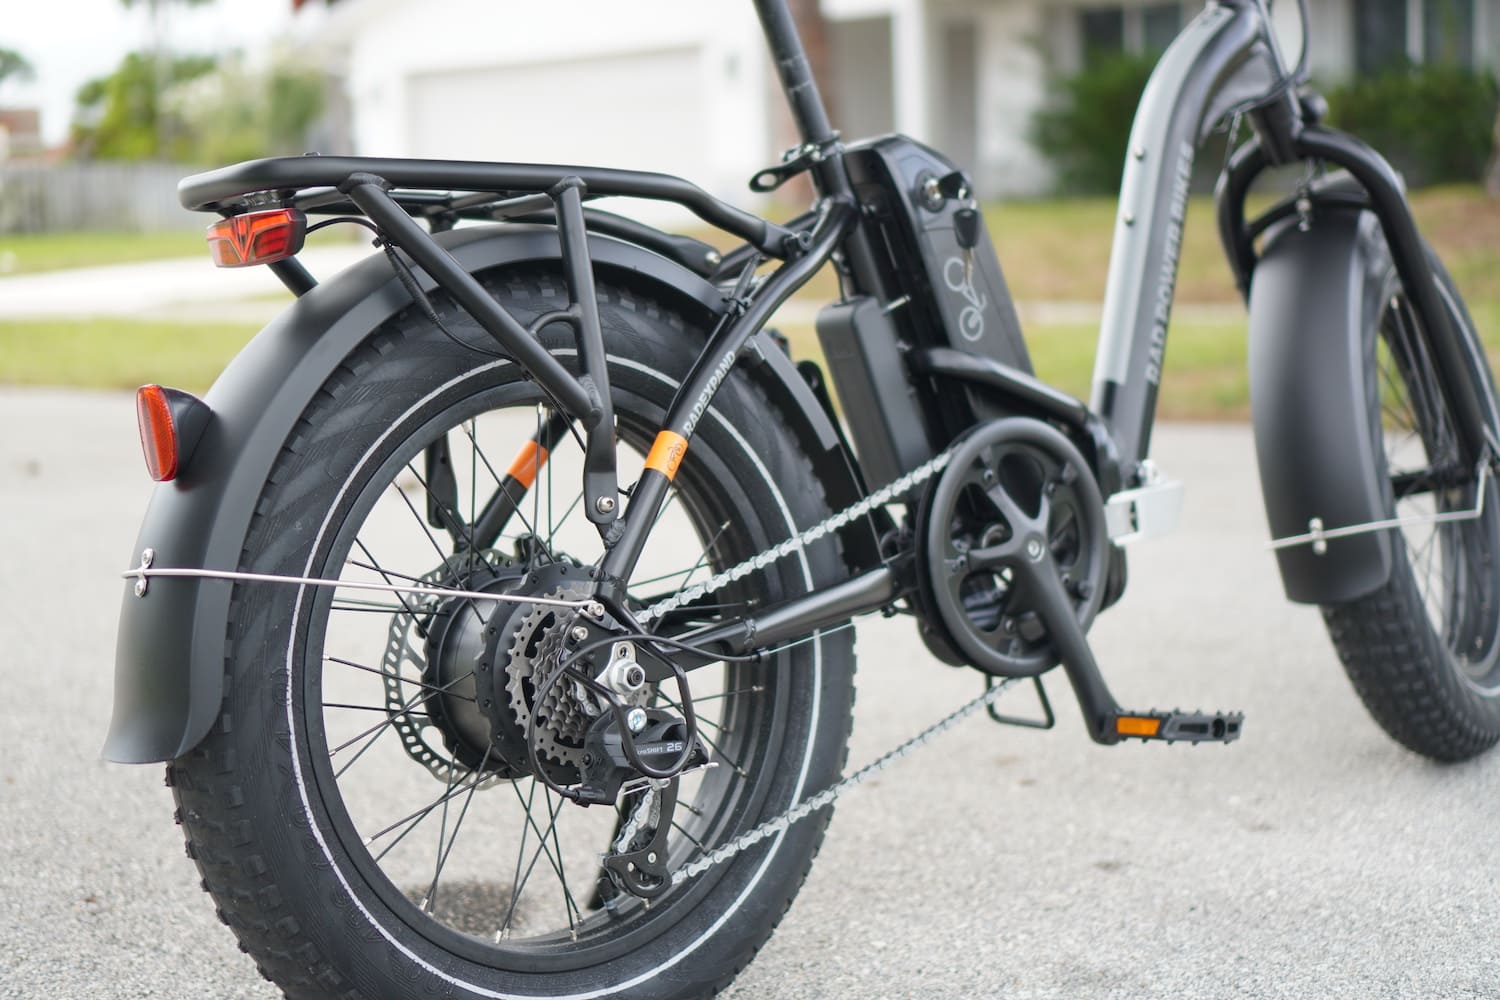 rad power bikes radexpand 5 electric bicycle